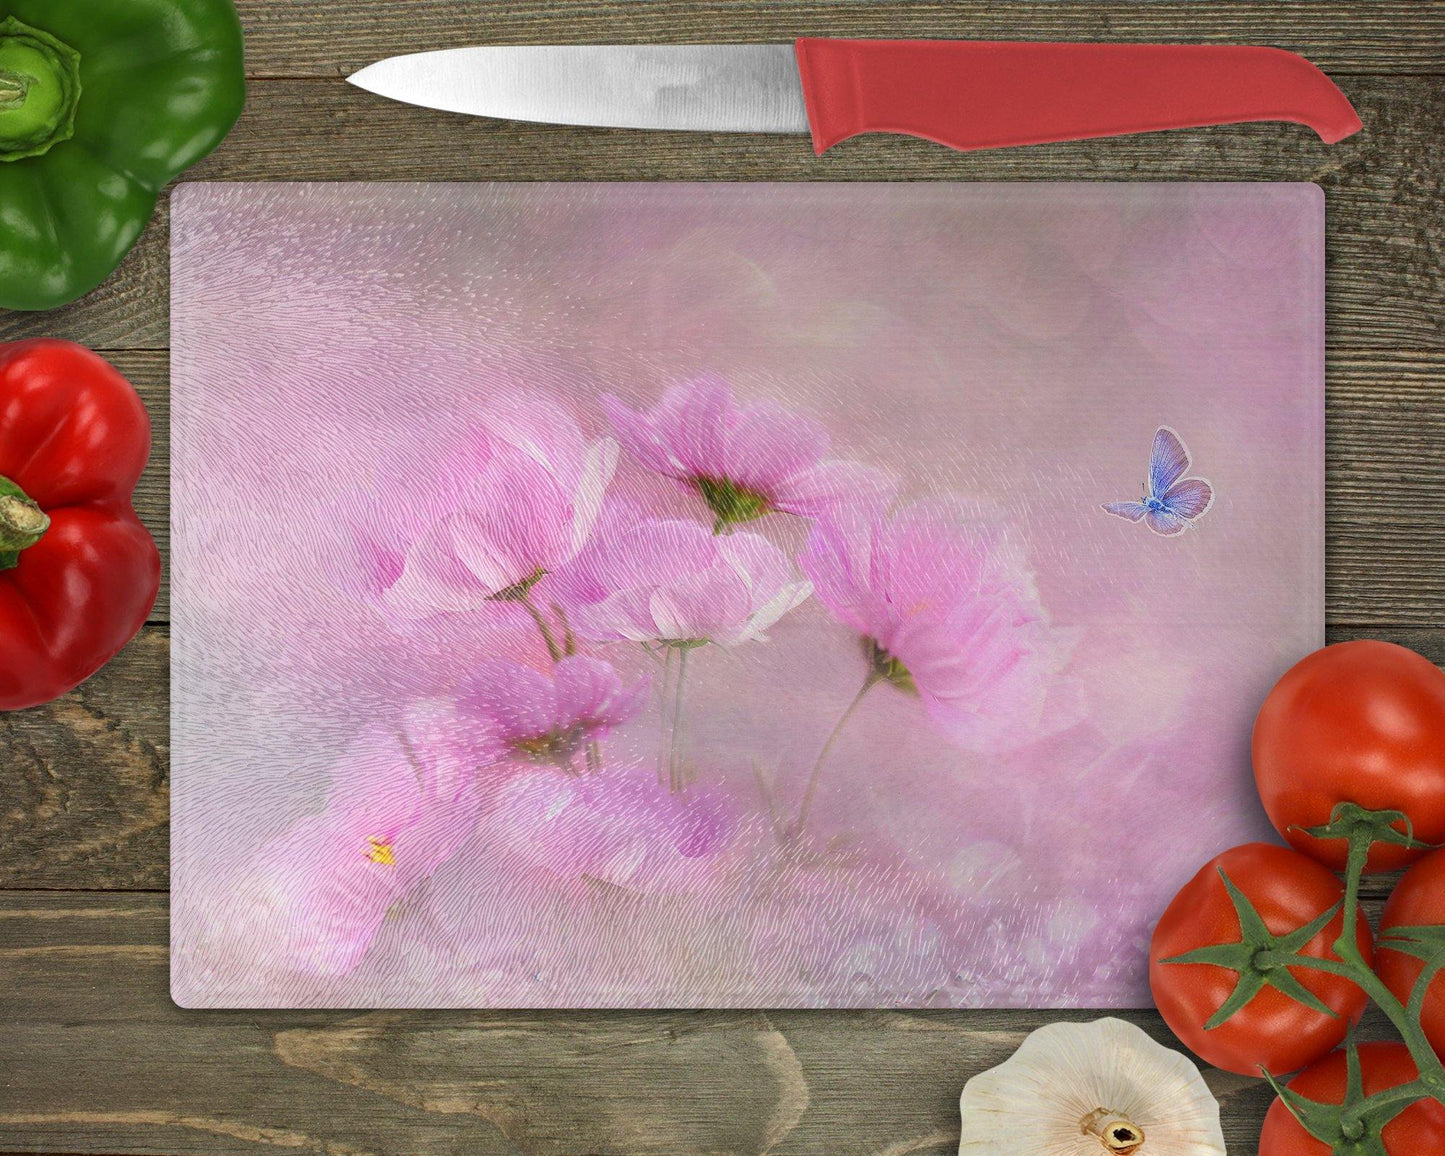 Blue Butterfly on Pink Flowers Glass Cutting Board - Schoppix Gifts